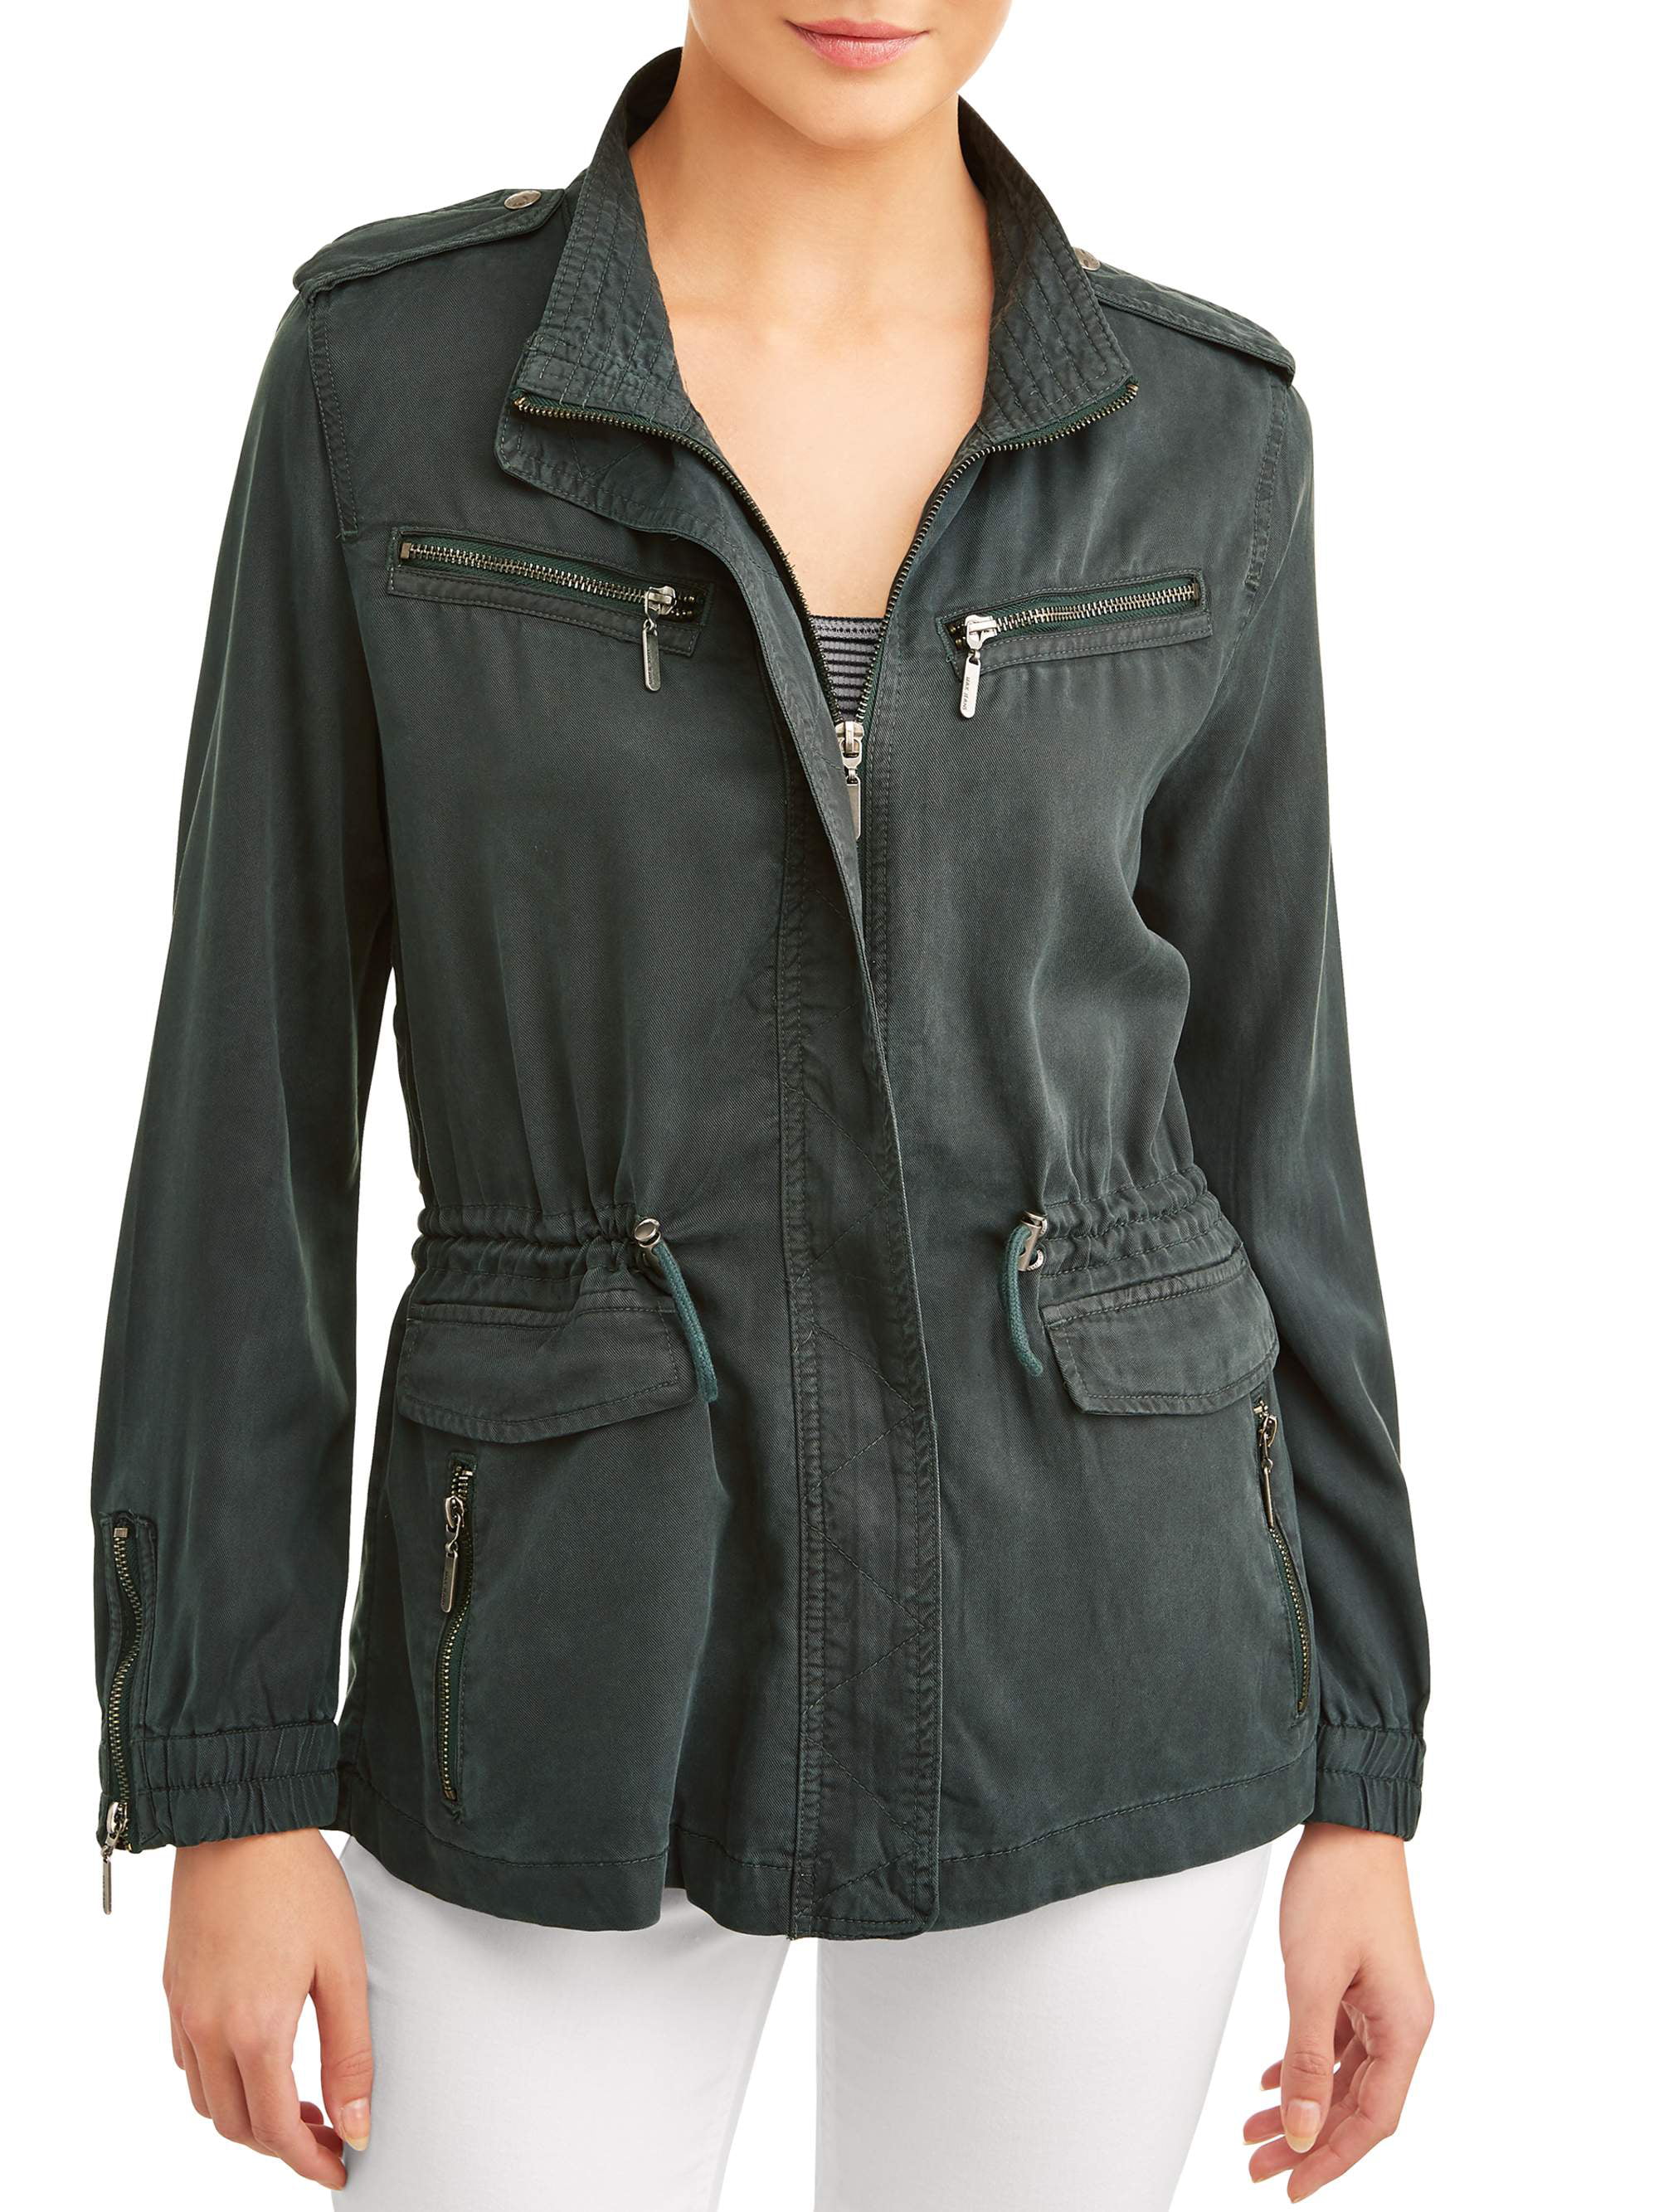 Max Jeans Women's Utility Jacket - Walmart.com